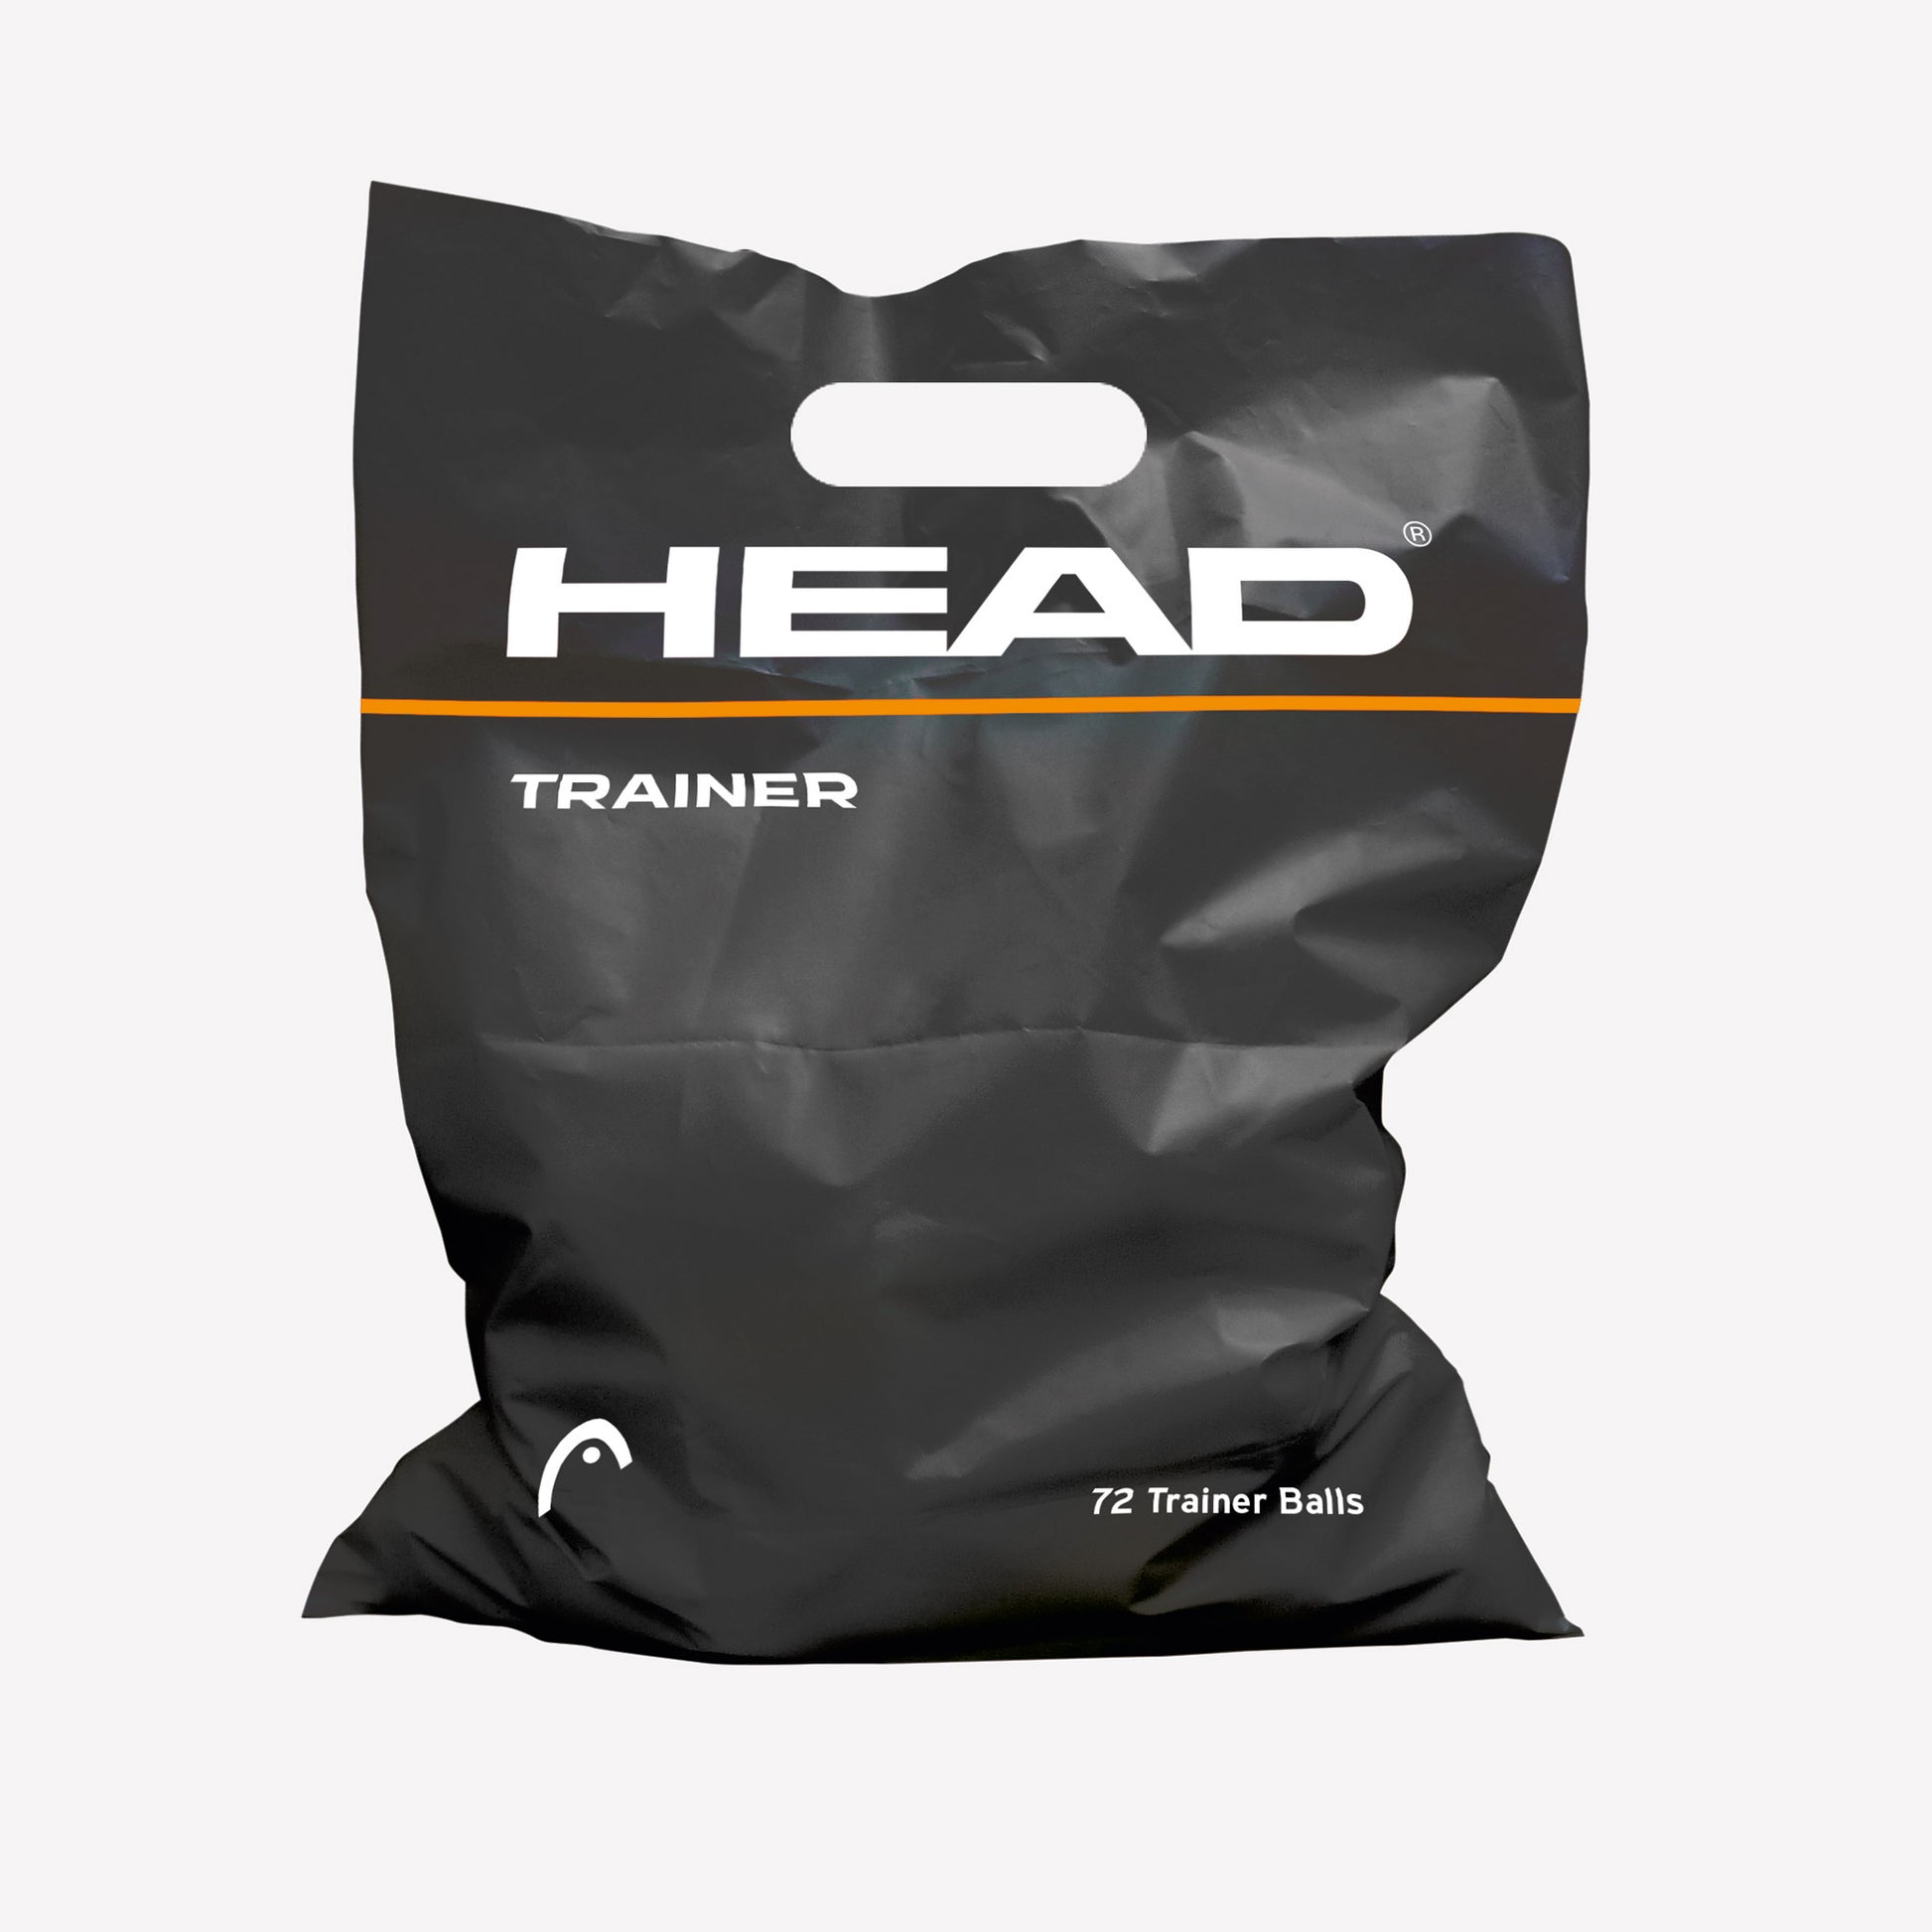 HEAD Trainer 72 Tennis Balls Polybag 1